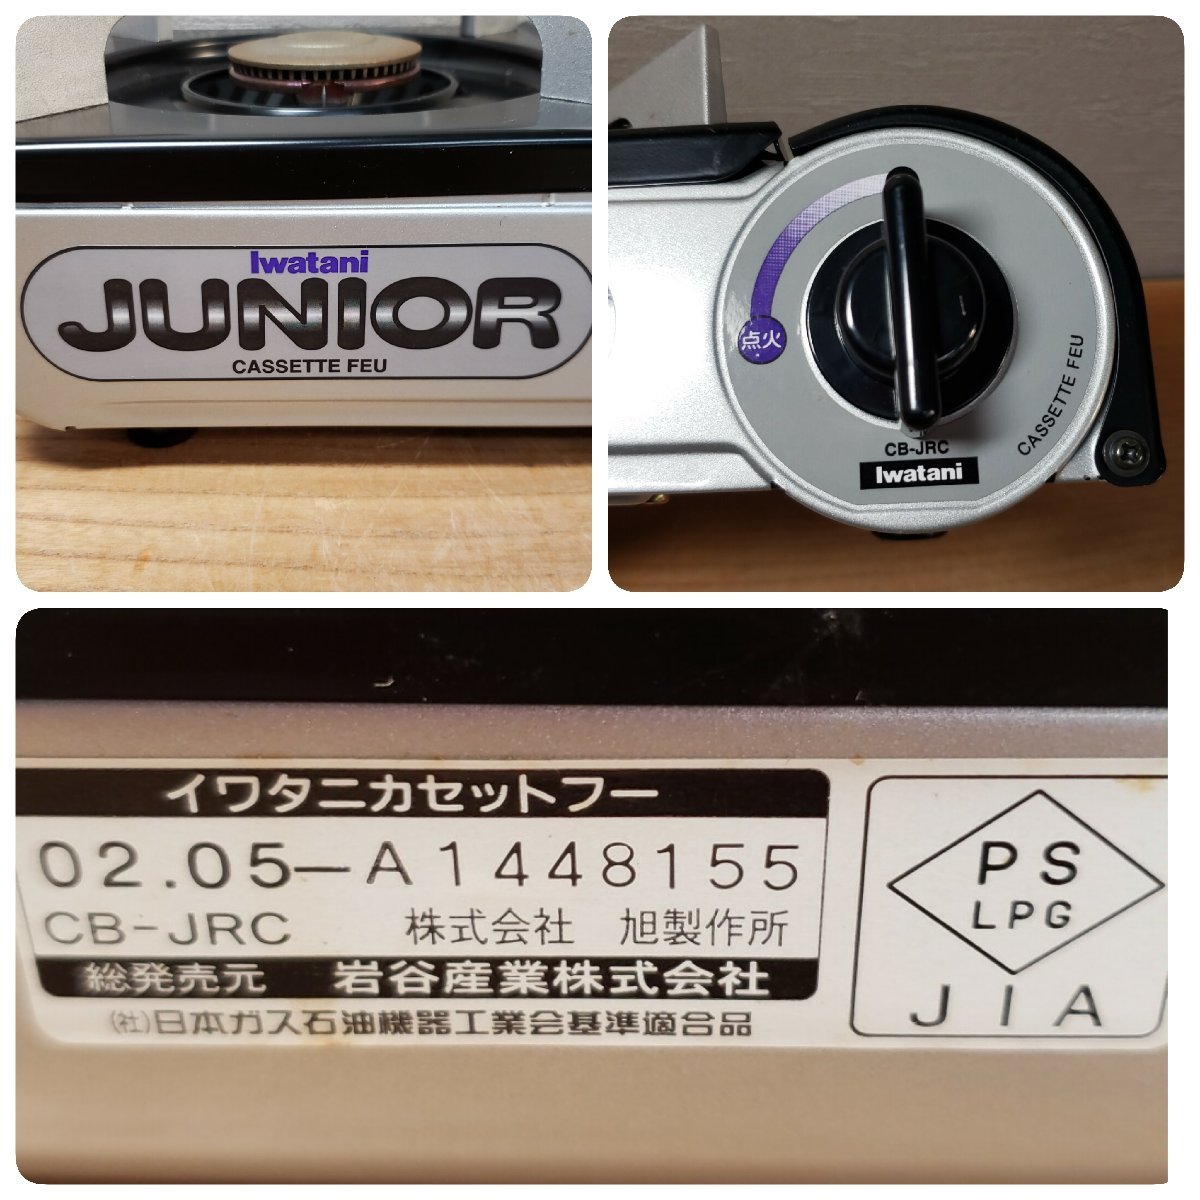  Iwatani кассета f-Jr. Iwatani CB-JRC портативная плита Iwatani плитка BBQ кемпинг товары для улицы кастрюля [60e1537]